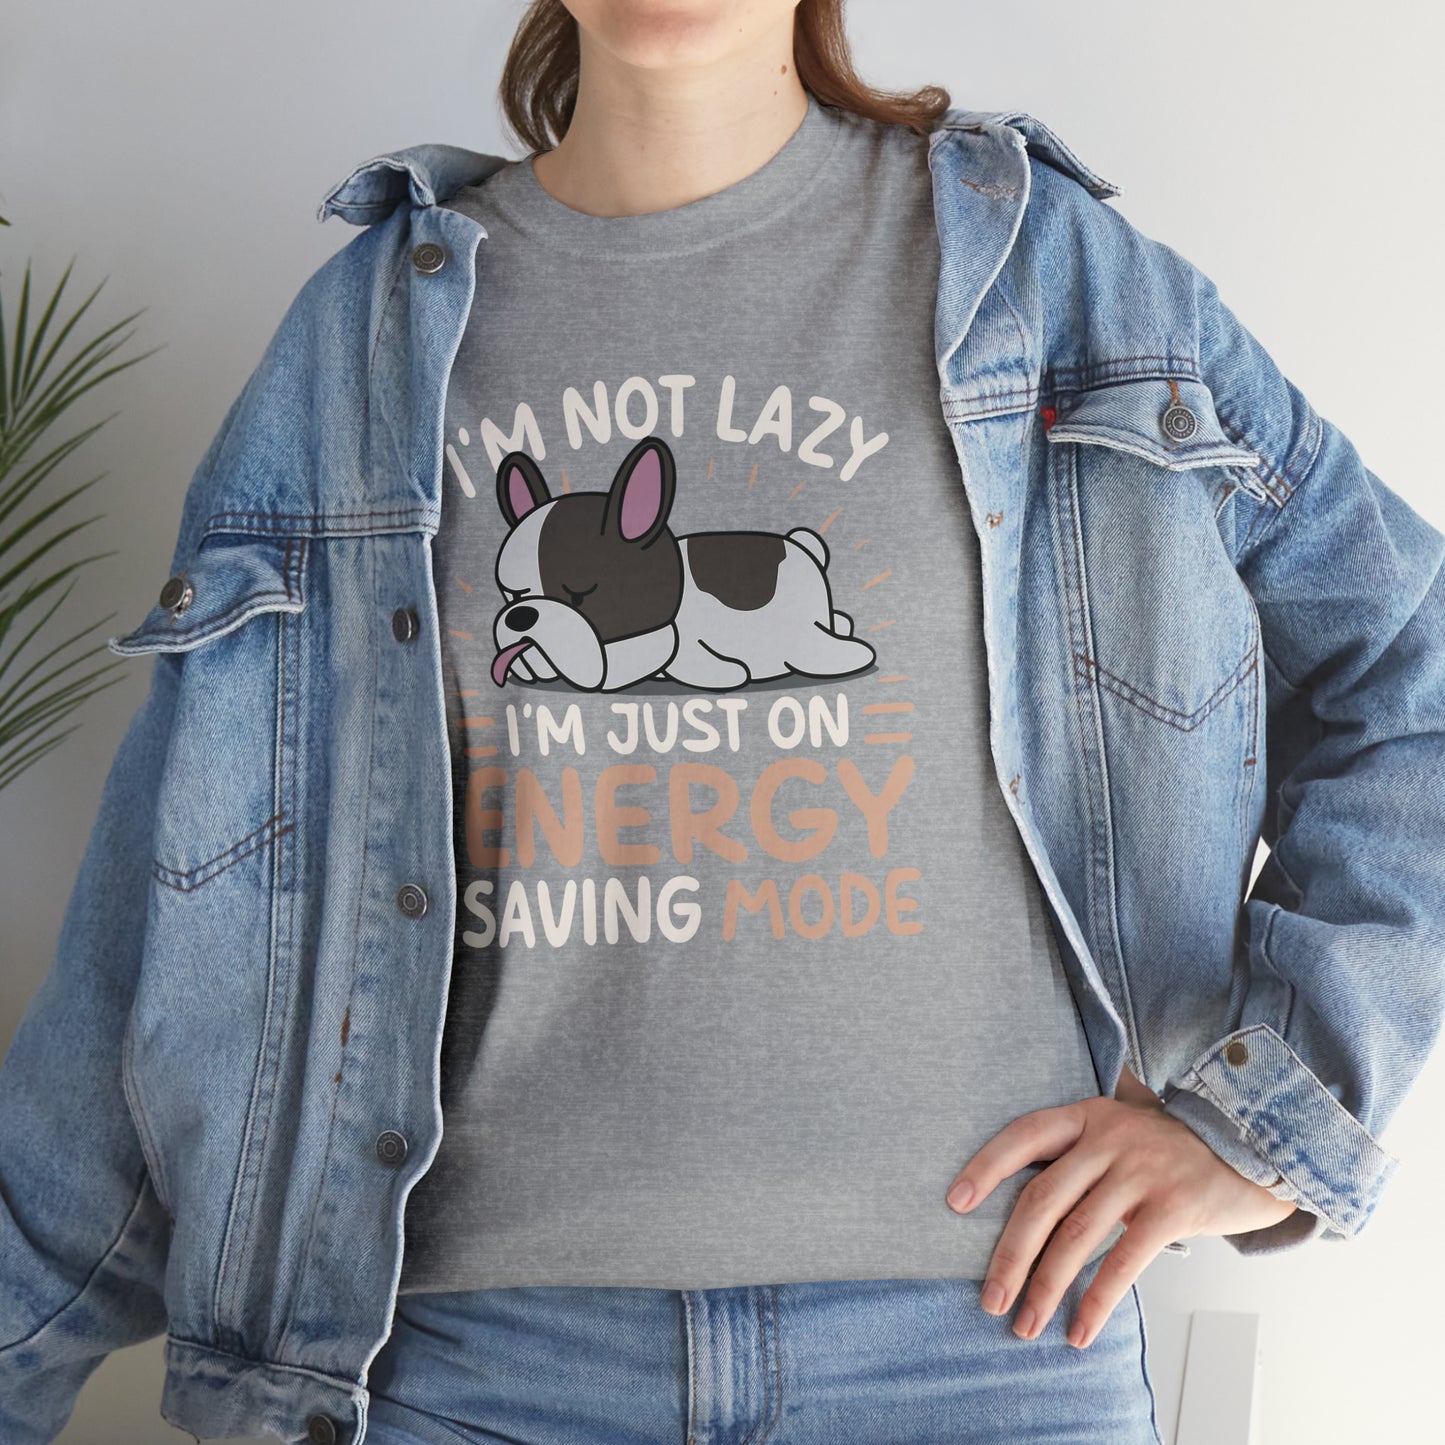 im not lazy - Unisex Cotton T-Shirt